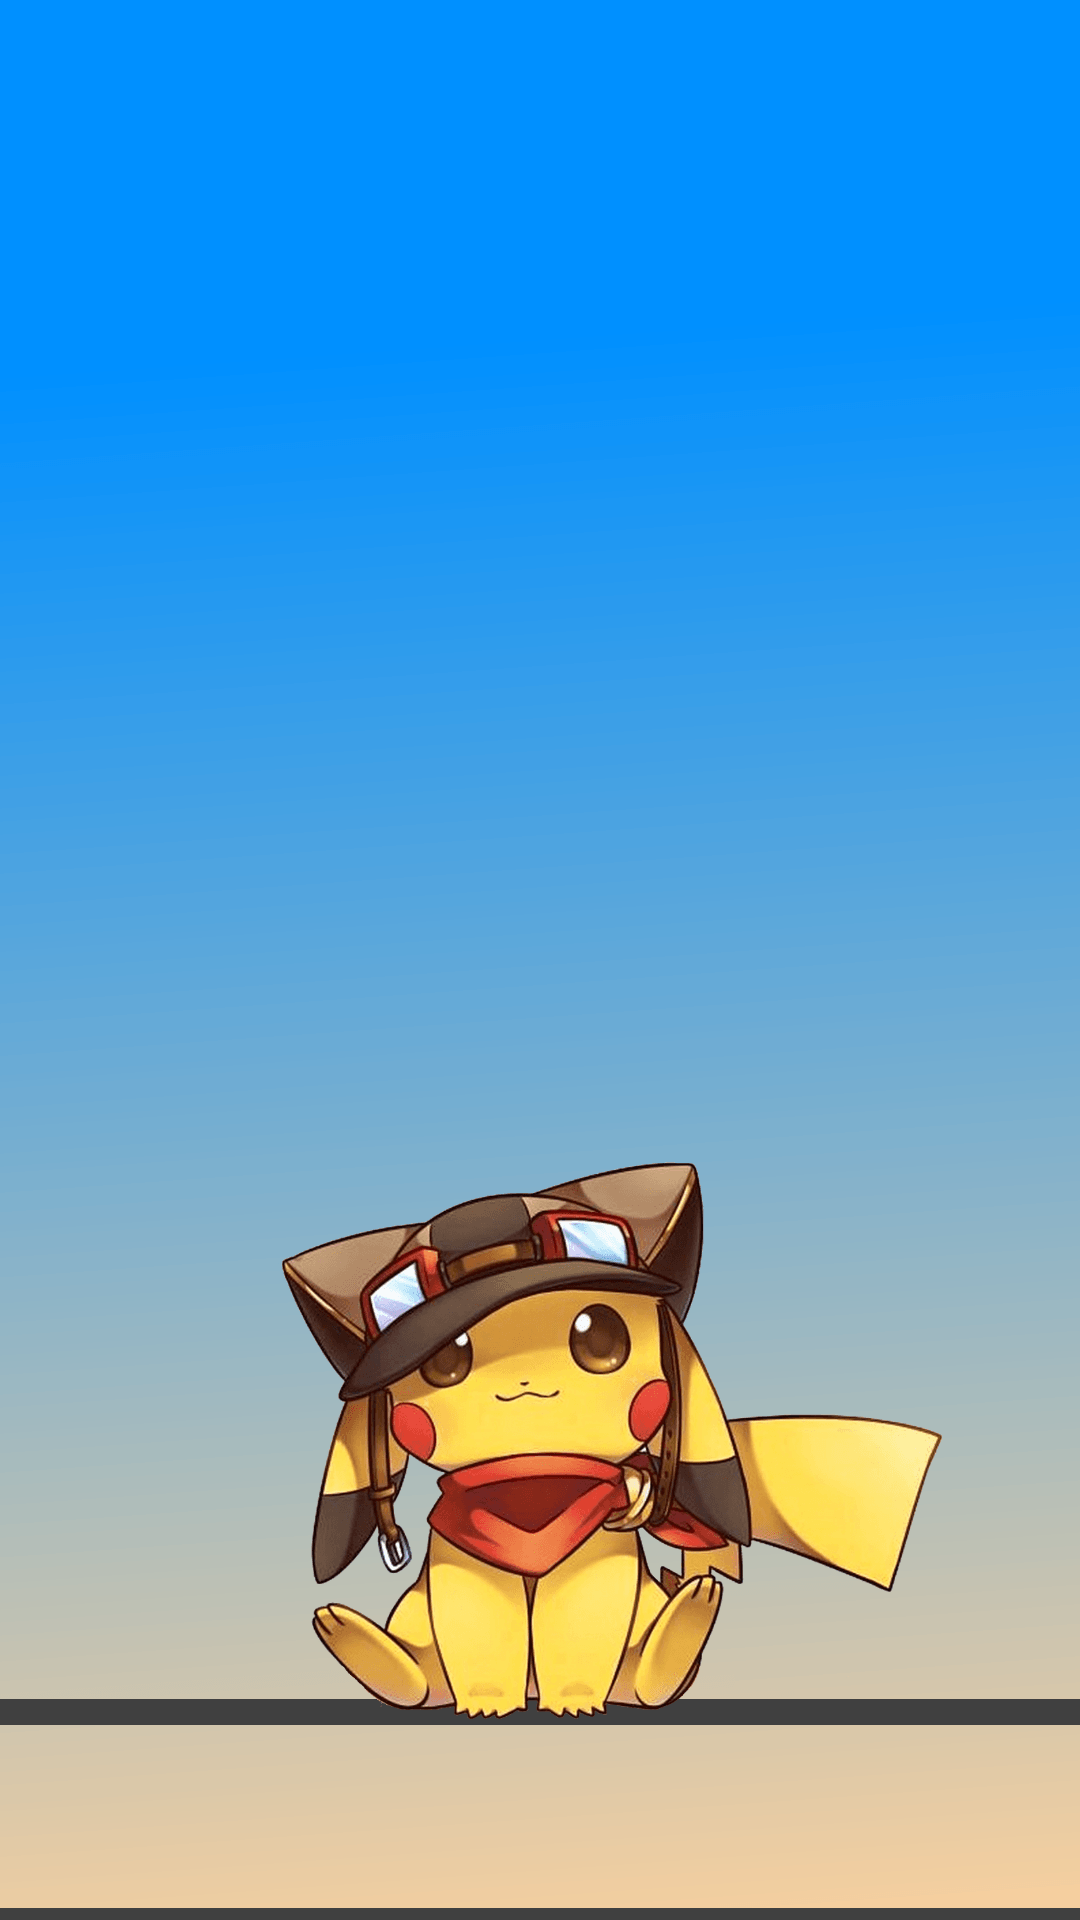 Anime Cute Pikachu iPad Wallpapers Free Download